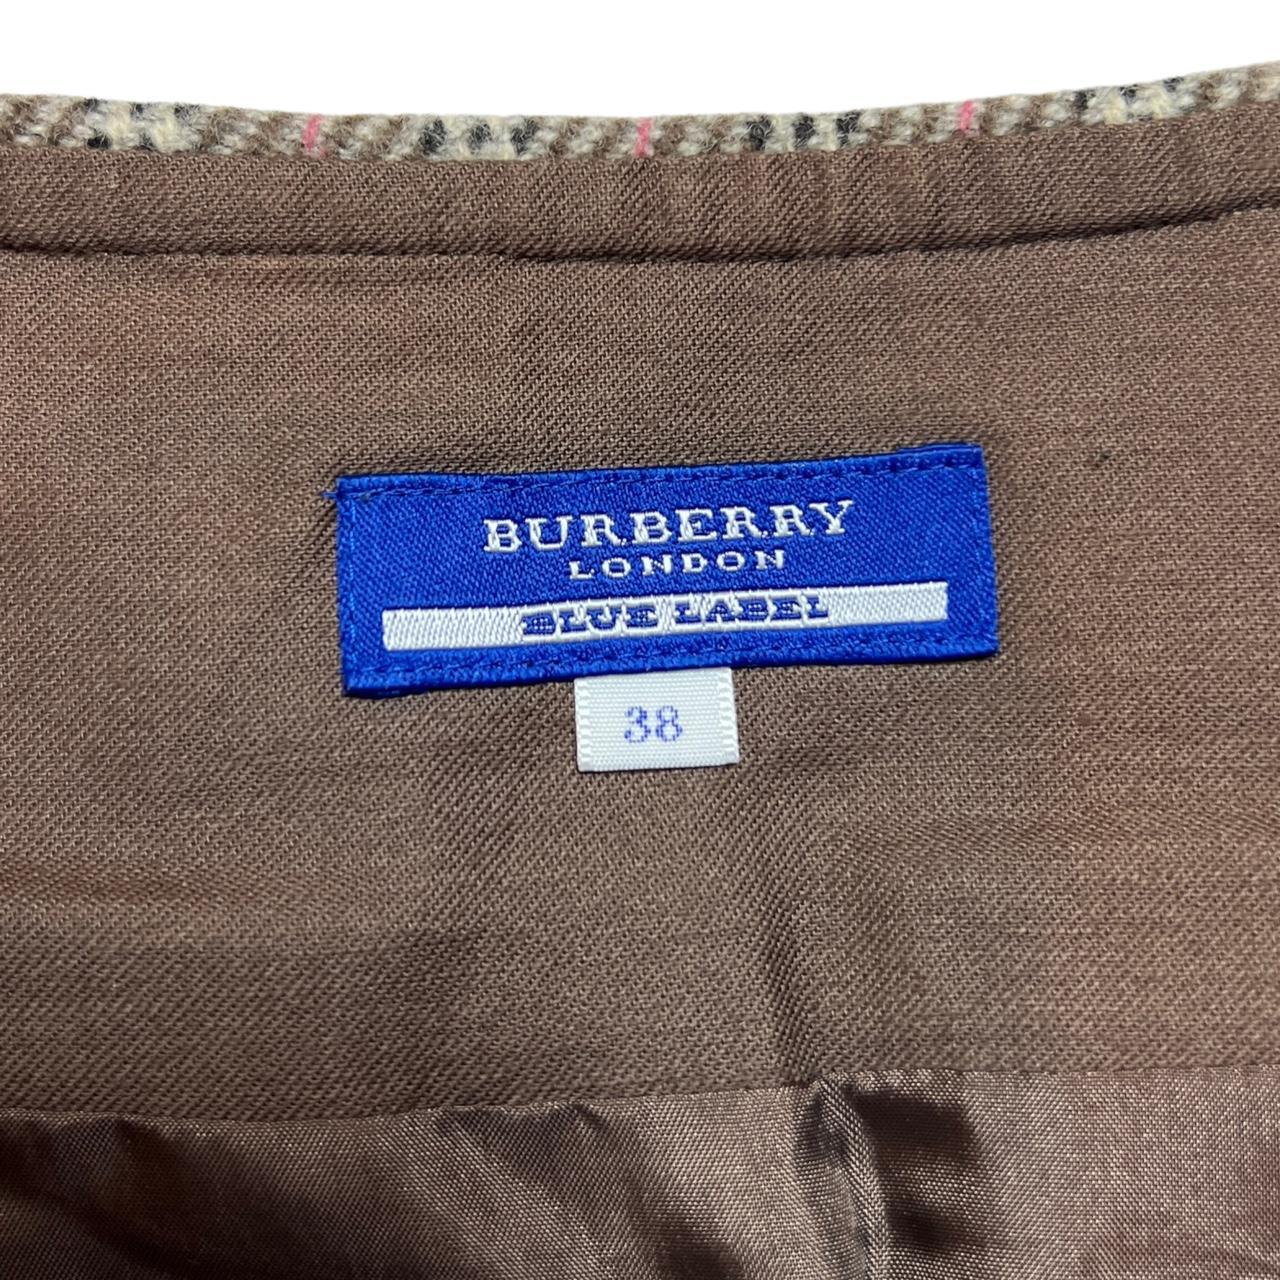 Burberry Women's Brown and Pink Skirt | Depop